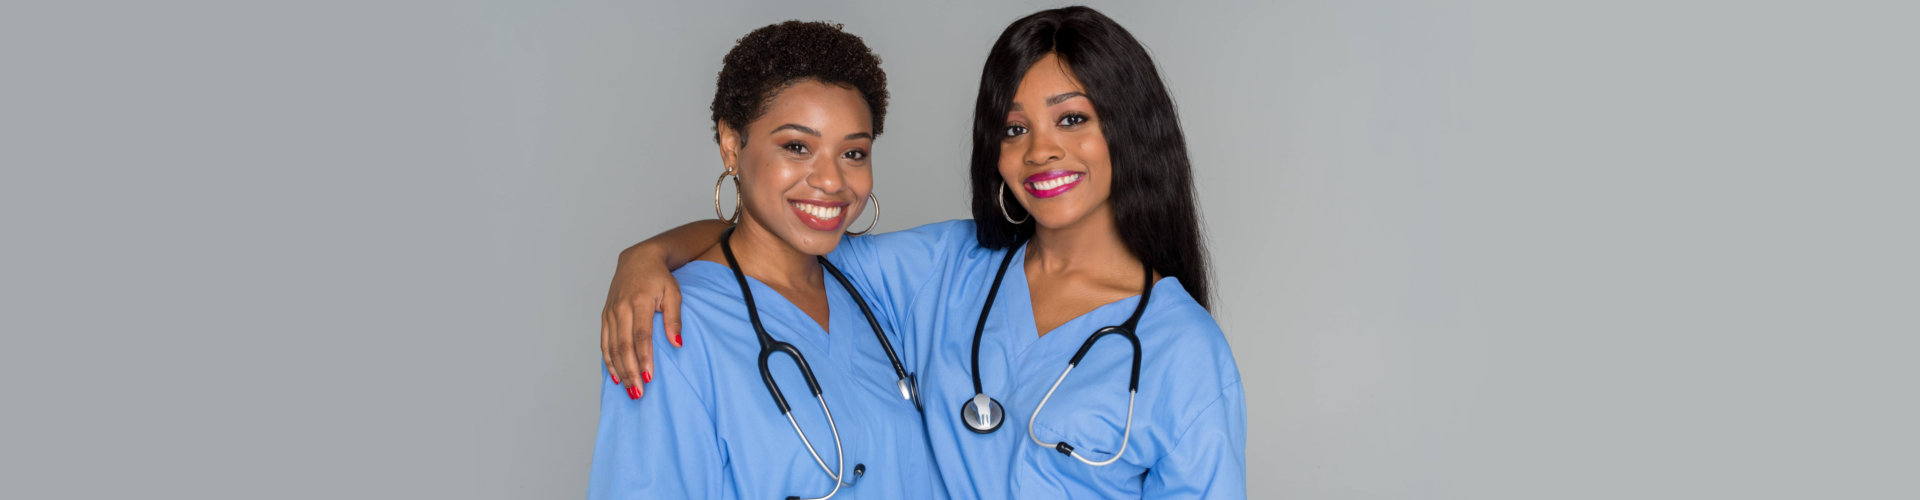 two female nurses